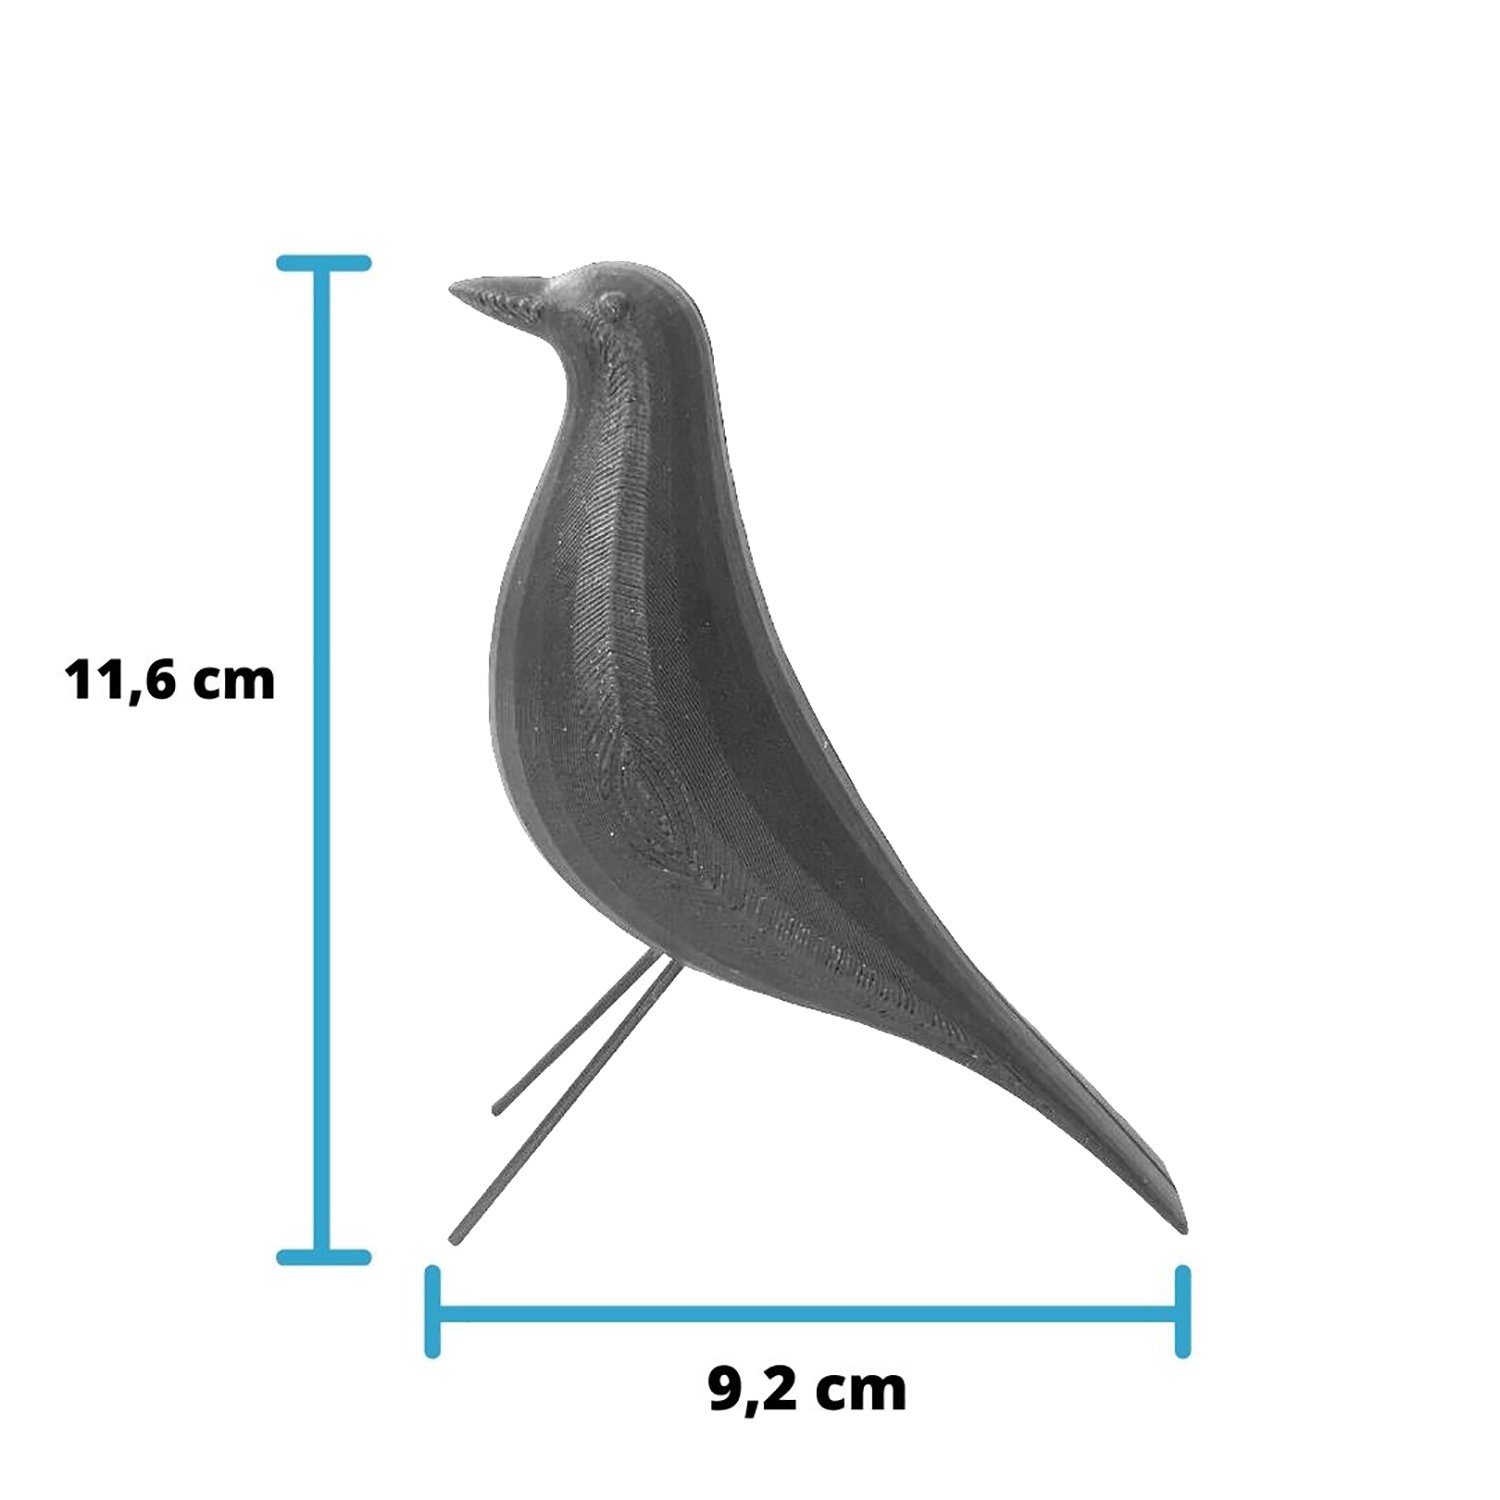 Pássaro P Decorativo - 11,6 Cm Altura -Toque 3D:Azul Claro - 4